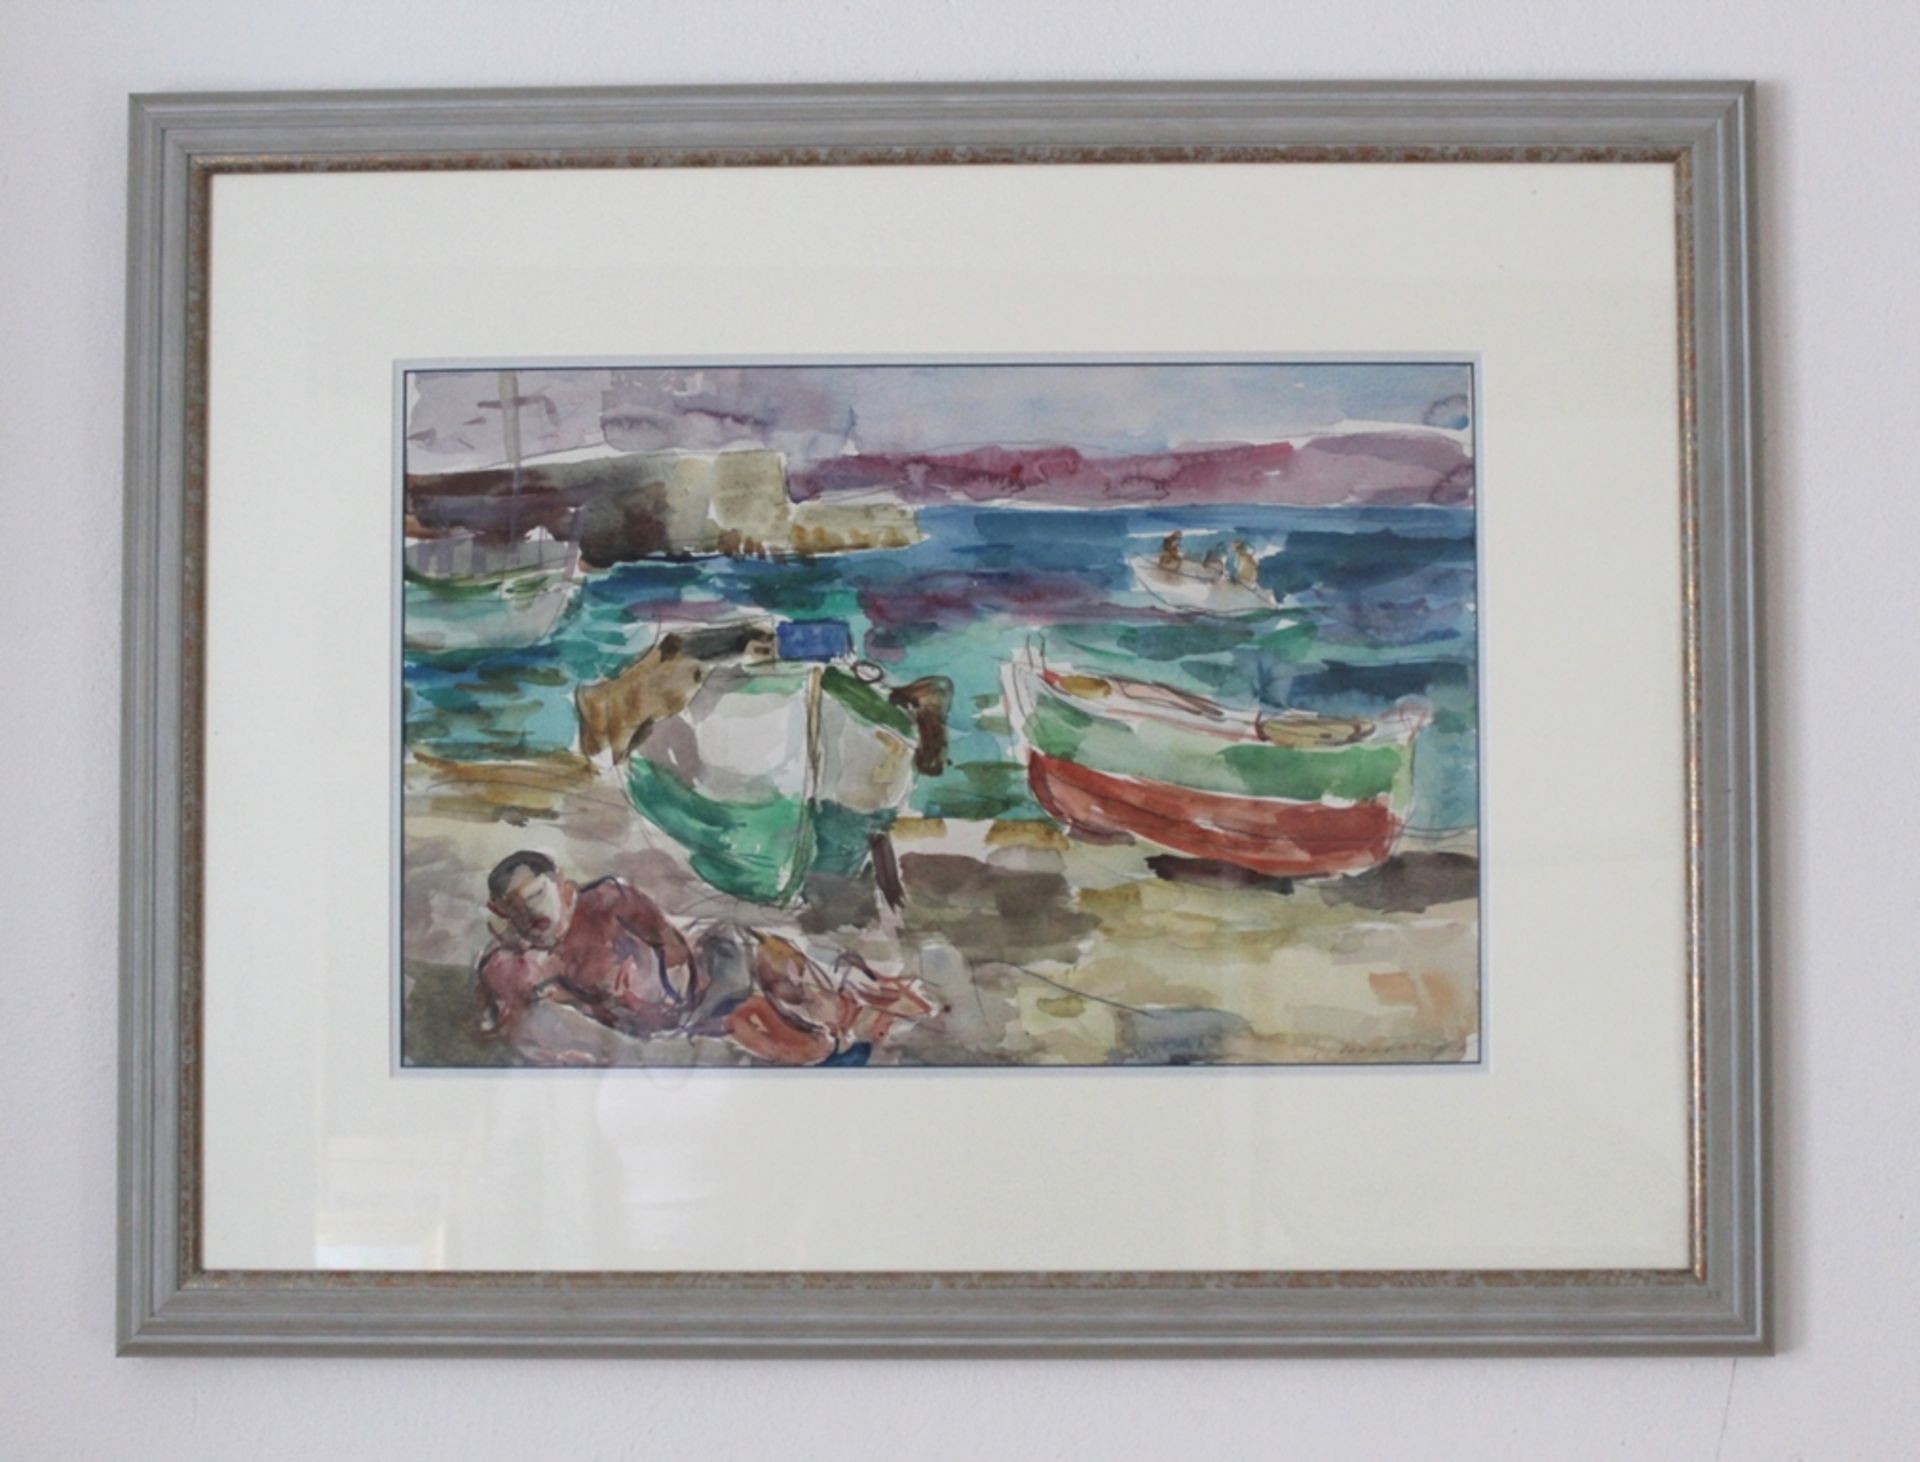 Aquarell "Boote am Strand", Künstler: Manfred Henninger, 1894-1986,  Gerahmt unter Glas, Maß mit Ra